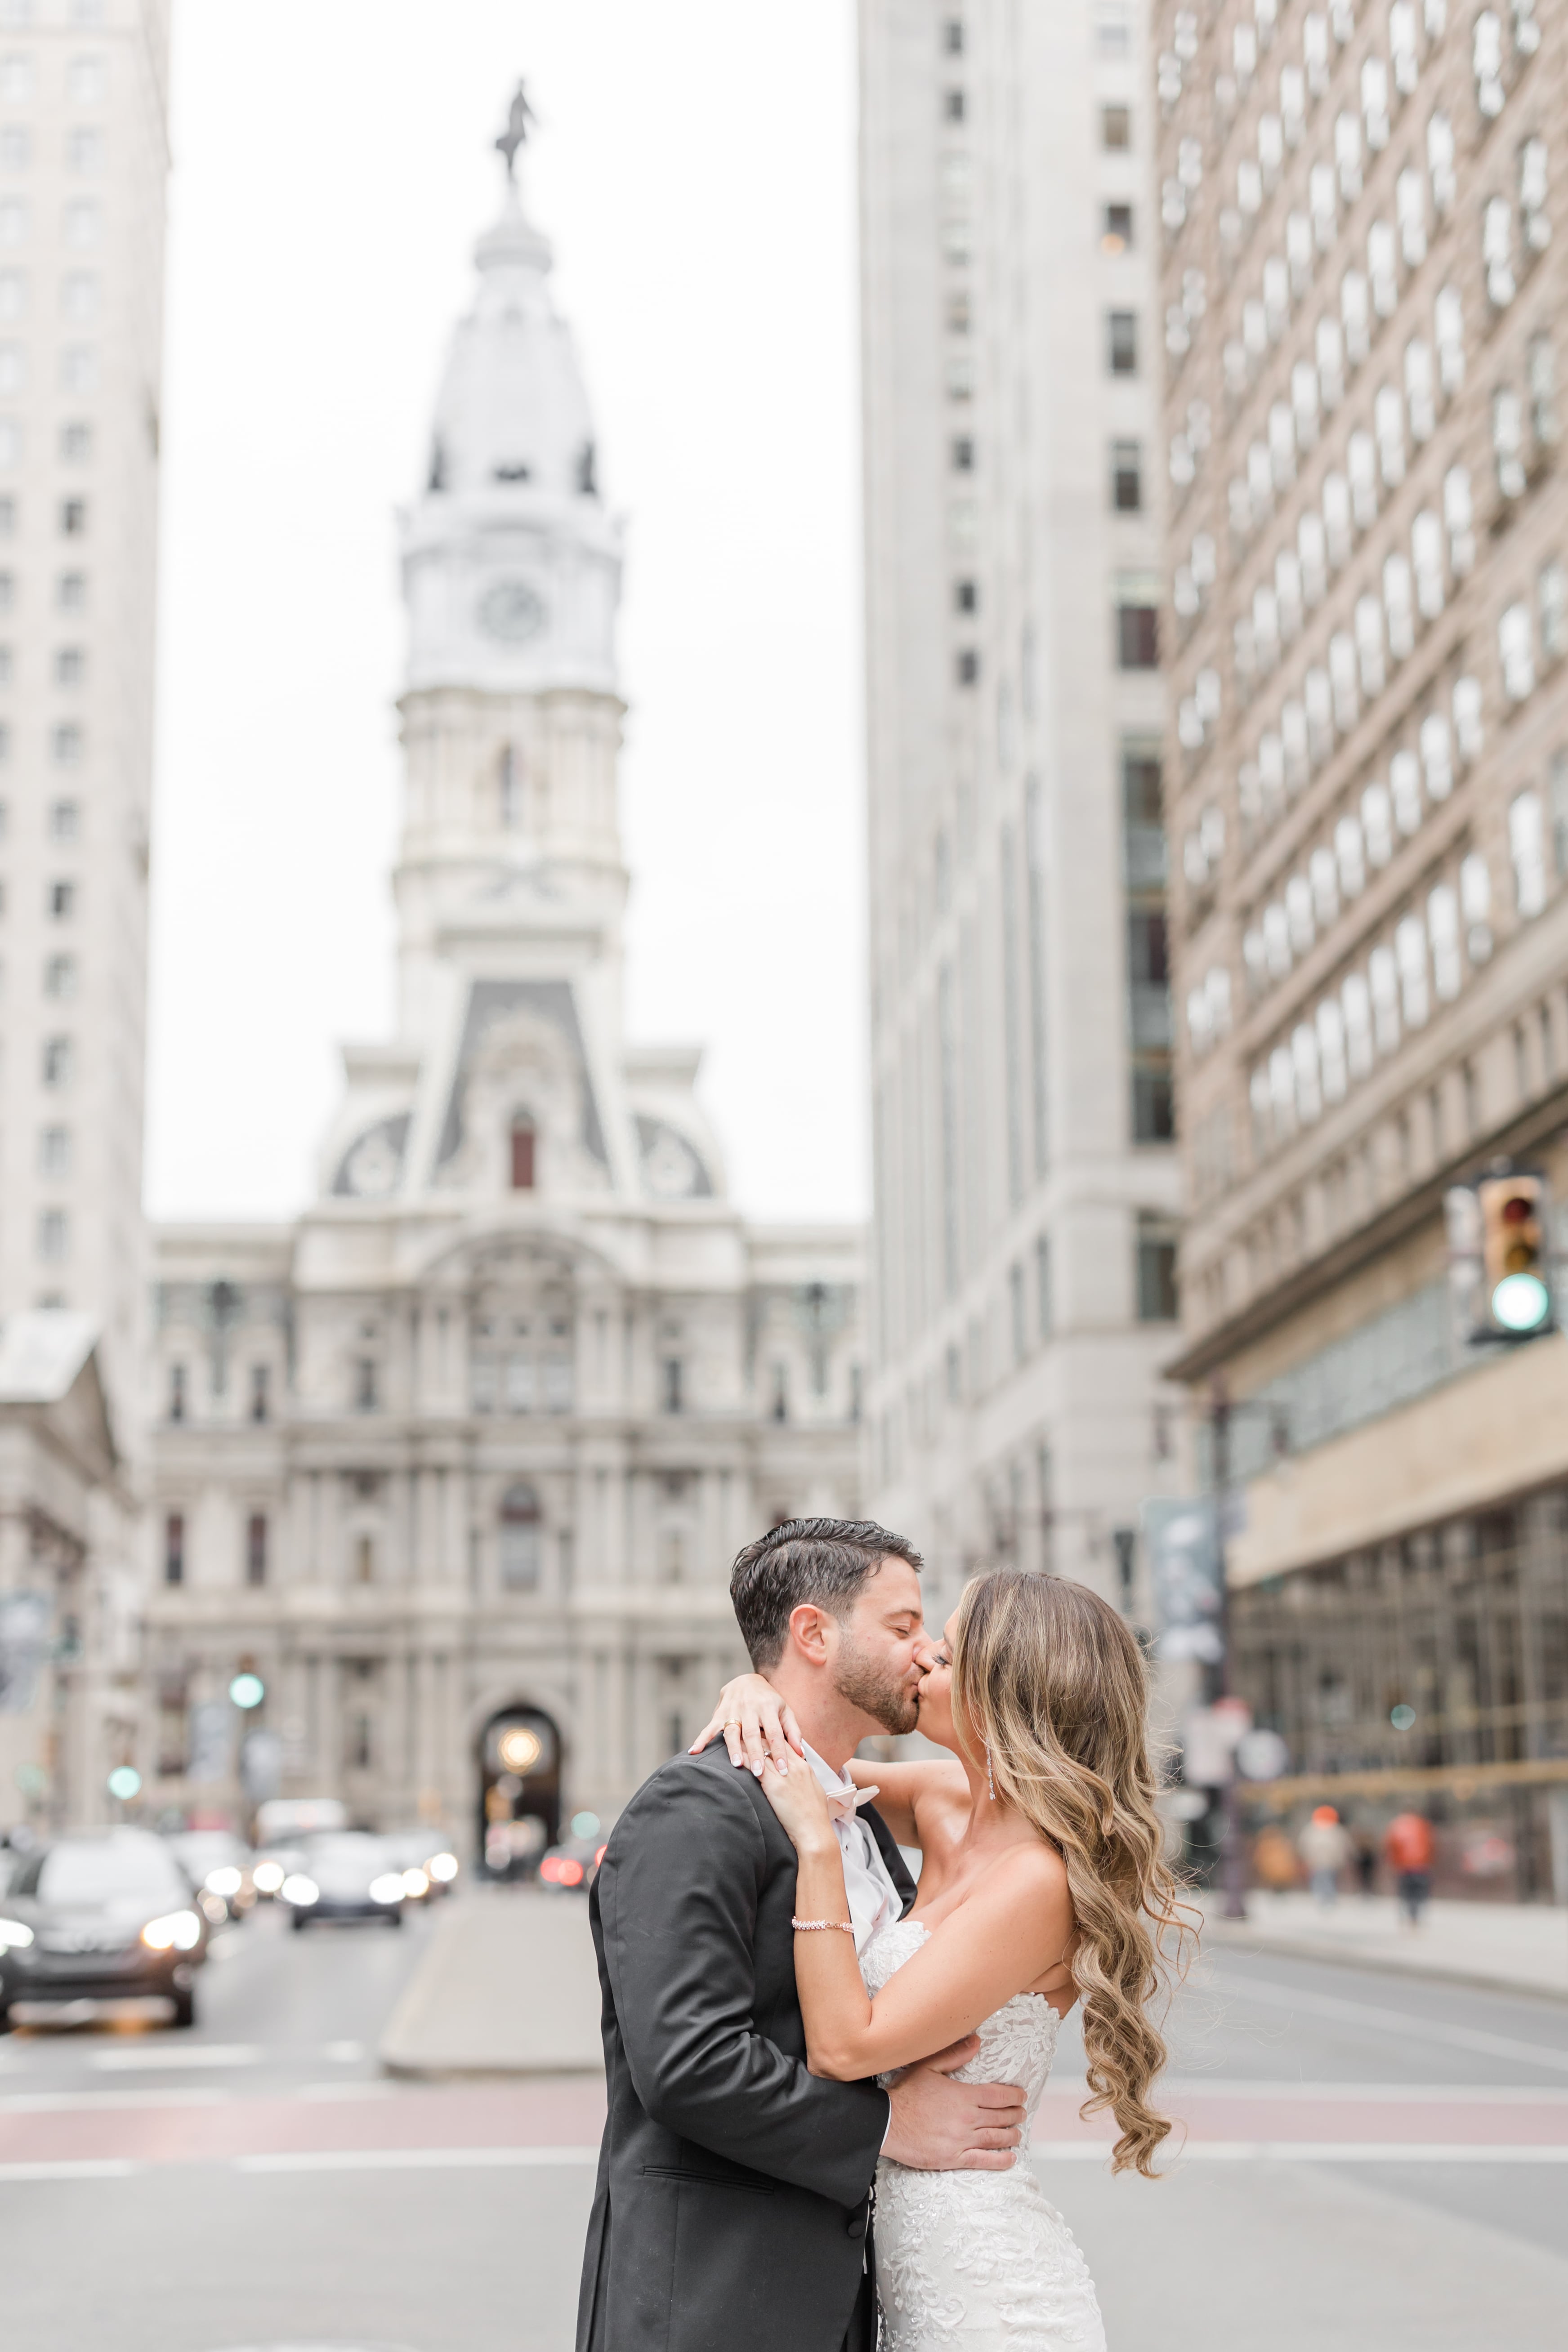 How to Submit Your Big Day to Philadelphia Wedding Magazine